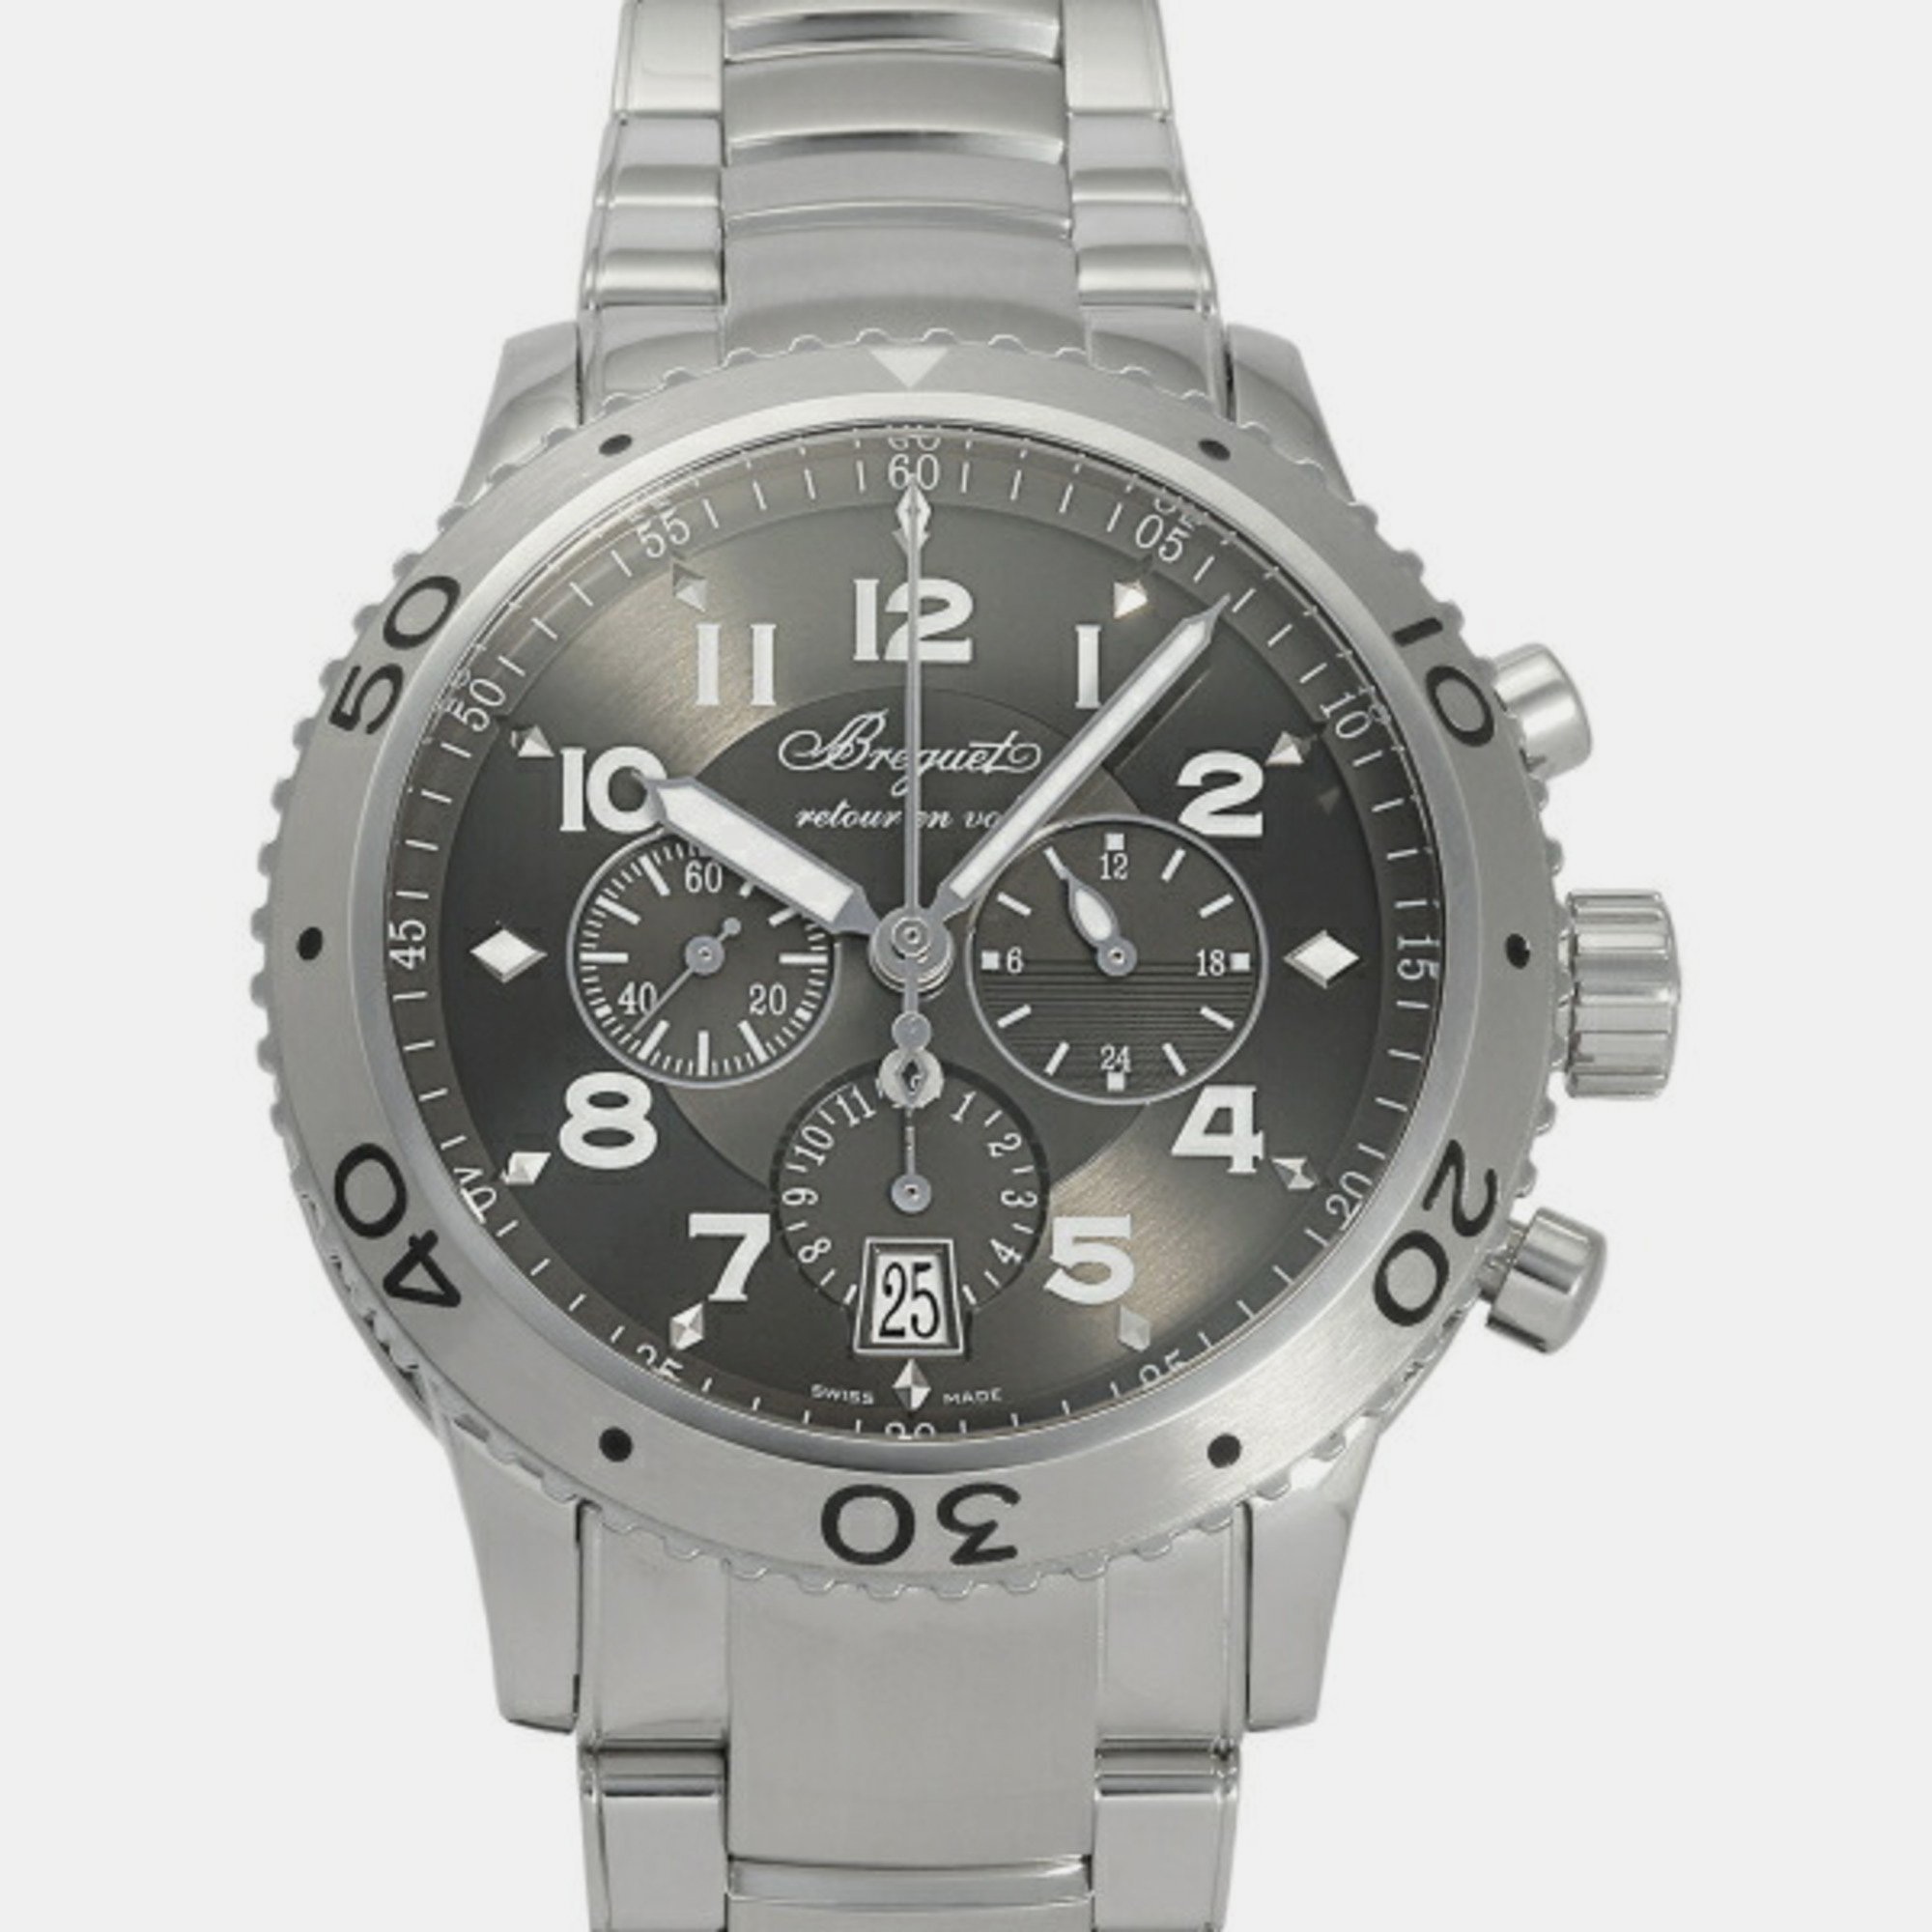 Breguet gray stainless steel transatlantic type xxi 3810st men's watch 42 mm